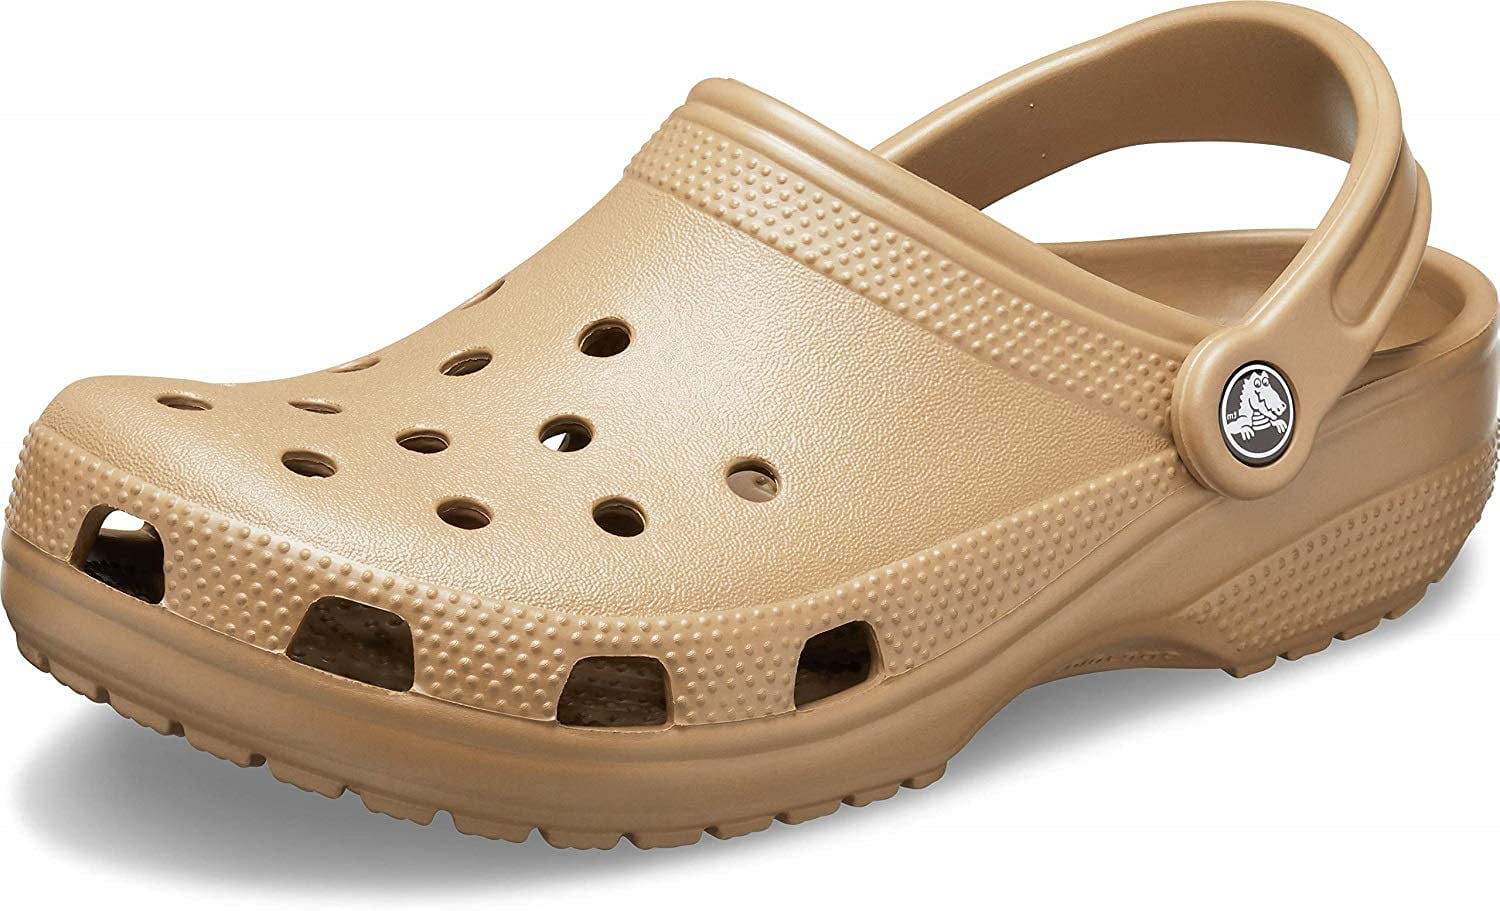 Classic Clogs Men's Slip On Water Shoes Sandal Slipper Mules Rubber Plastic Foam 